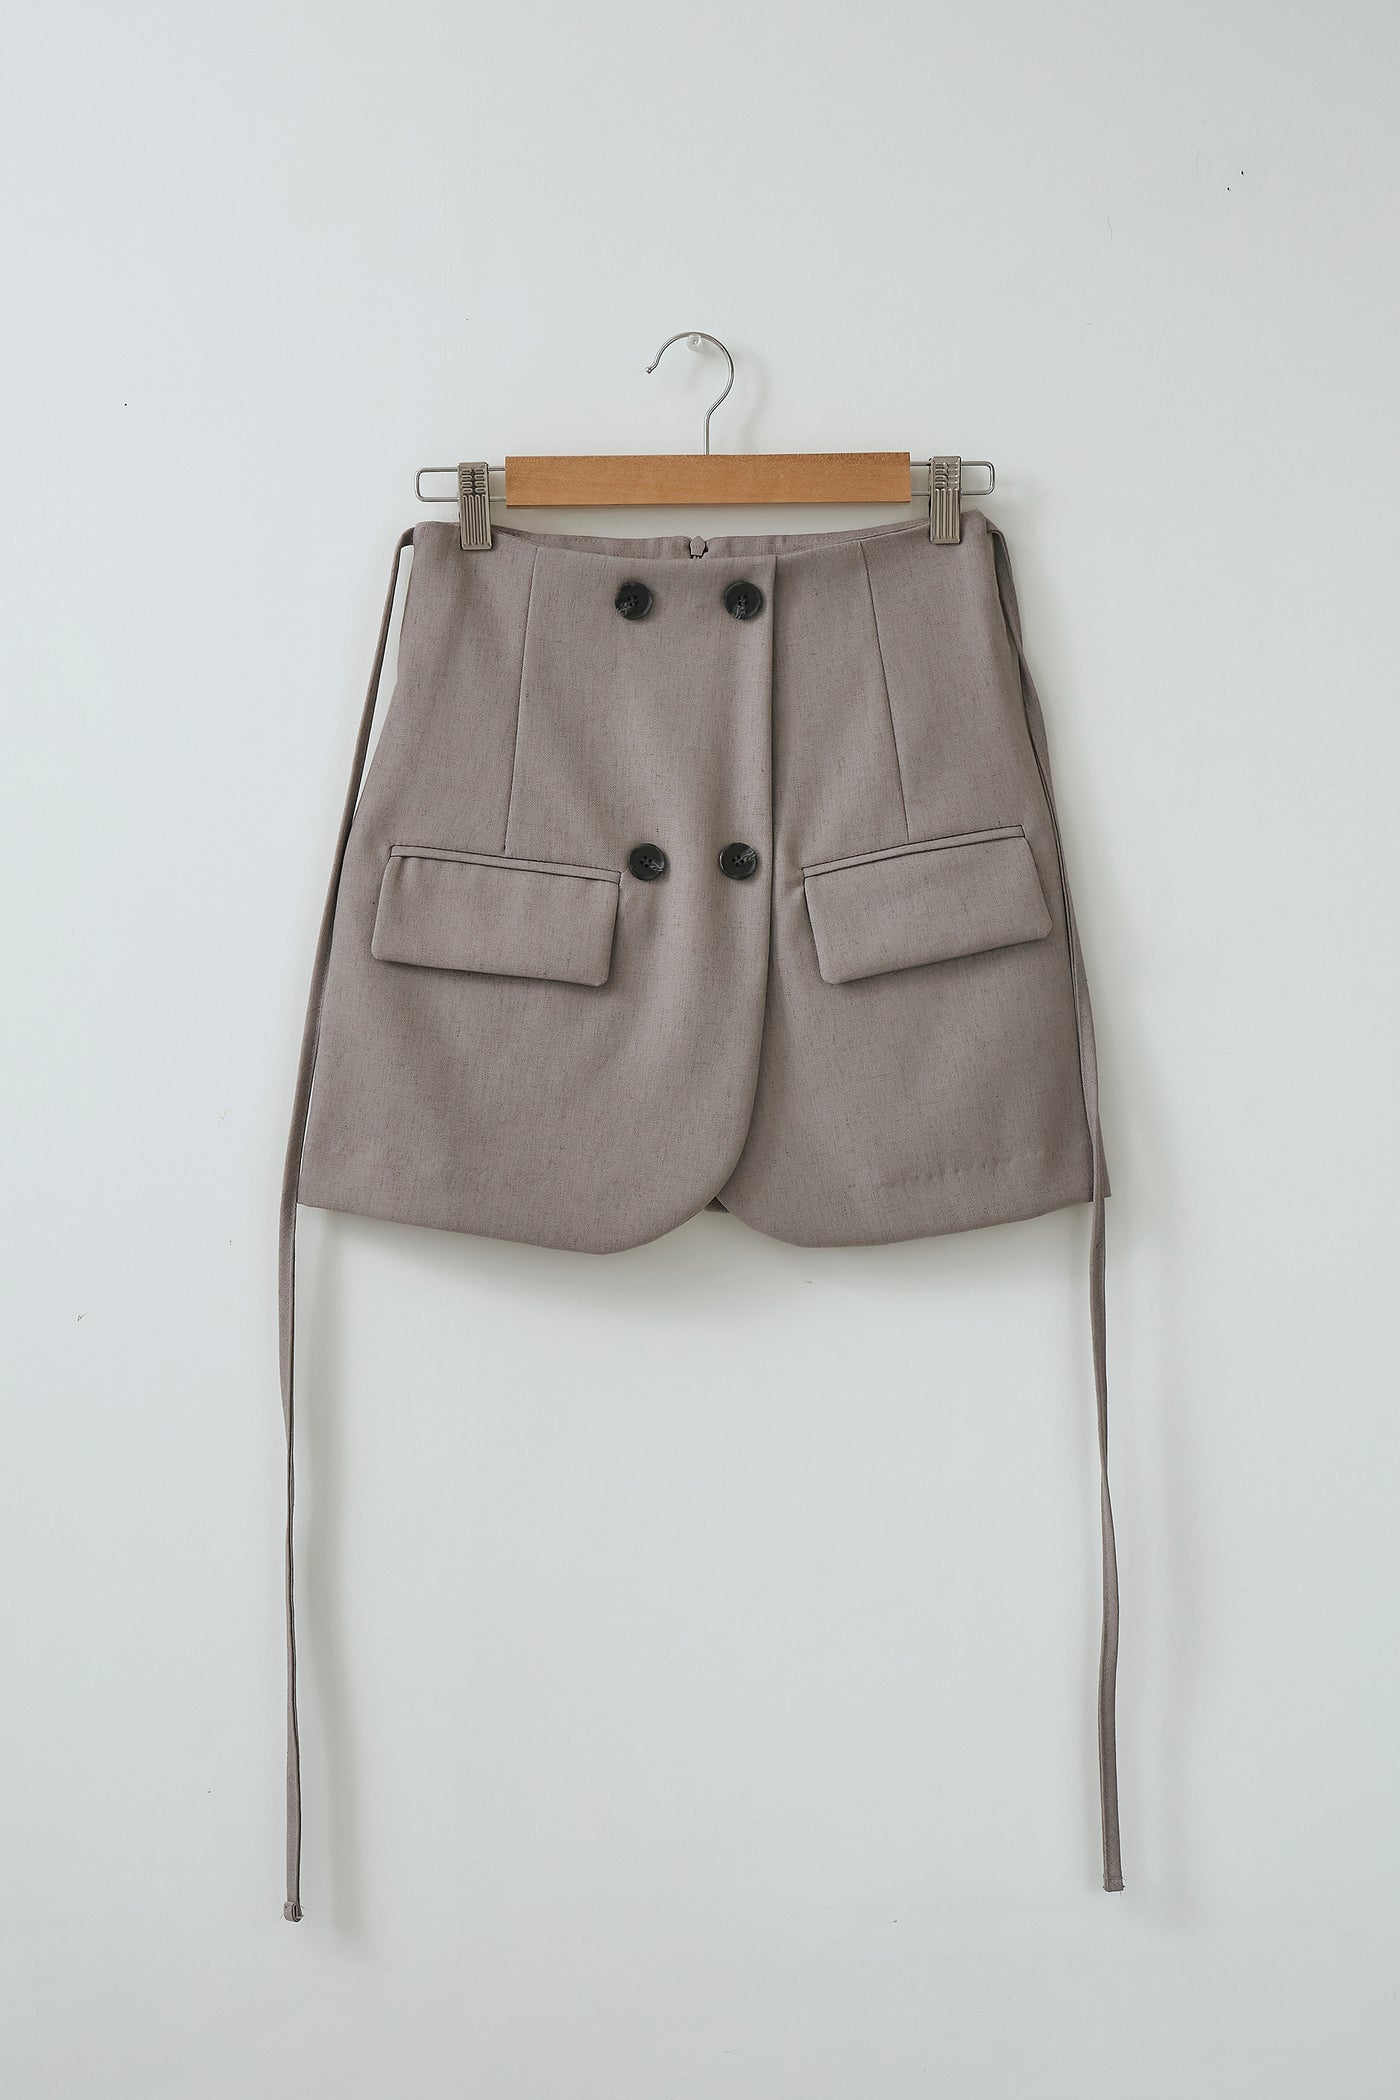 storets.com Harper Trench Mini Skirt